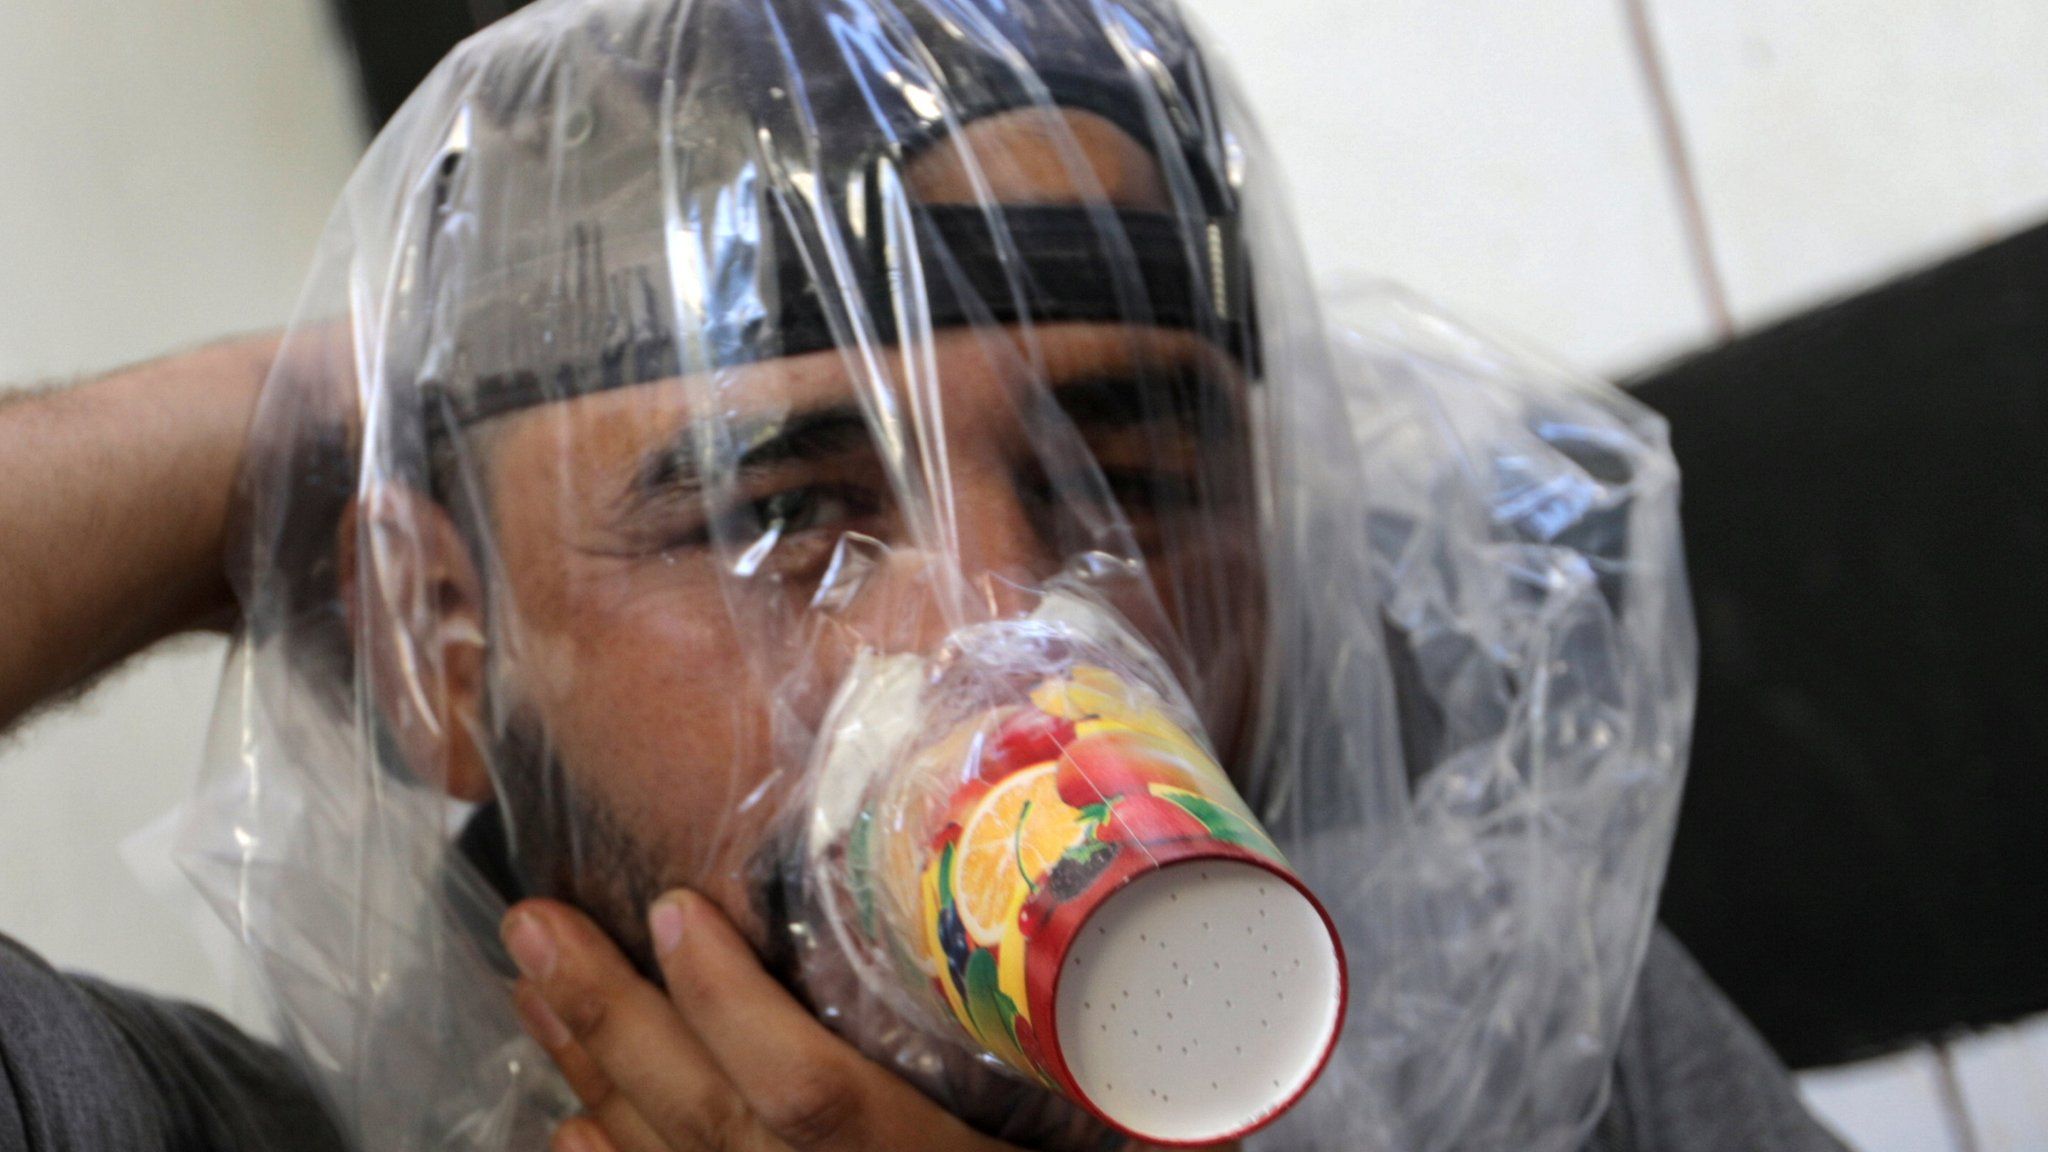 Hudhayfa al-Shahad tries an improvised gas mask in Idlib, Syria September 3, 2018